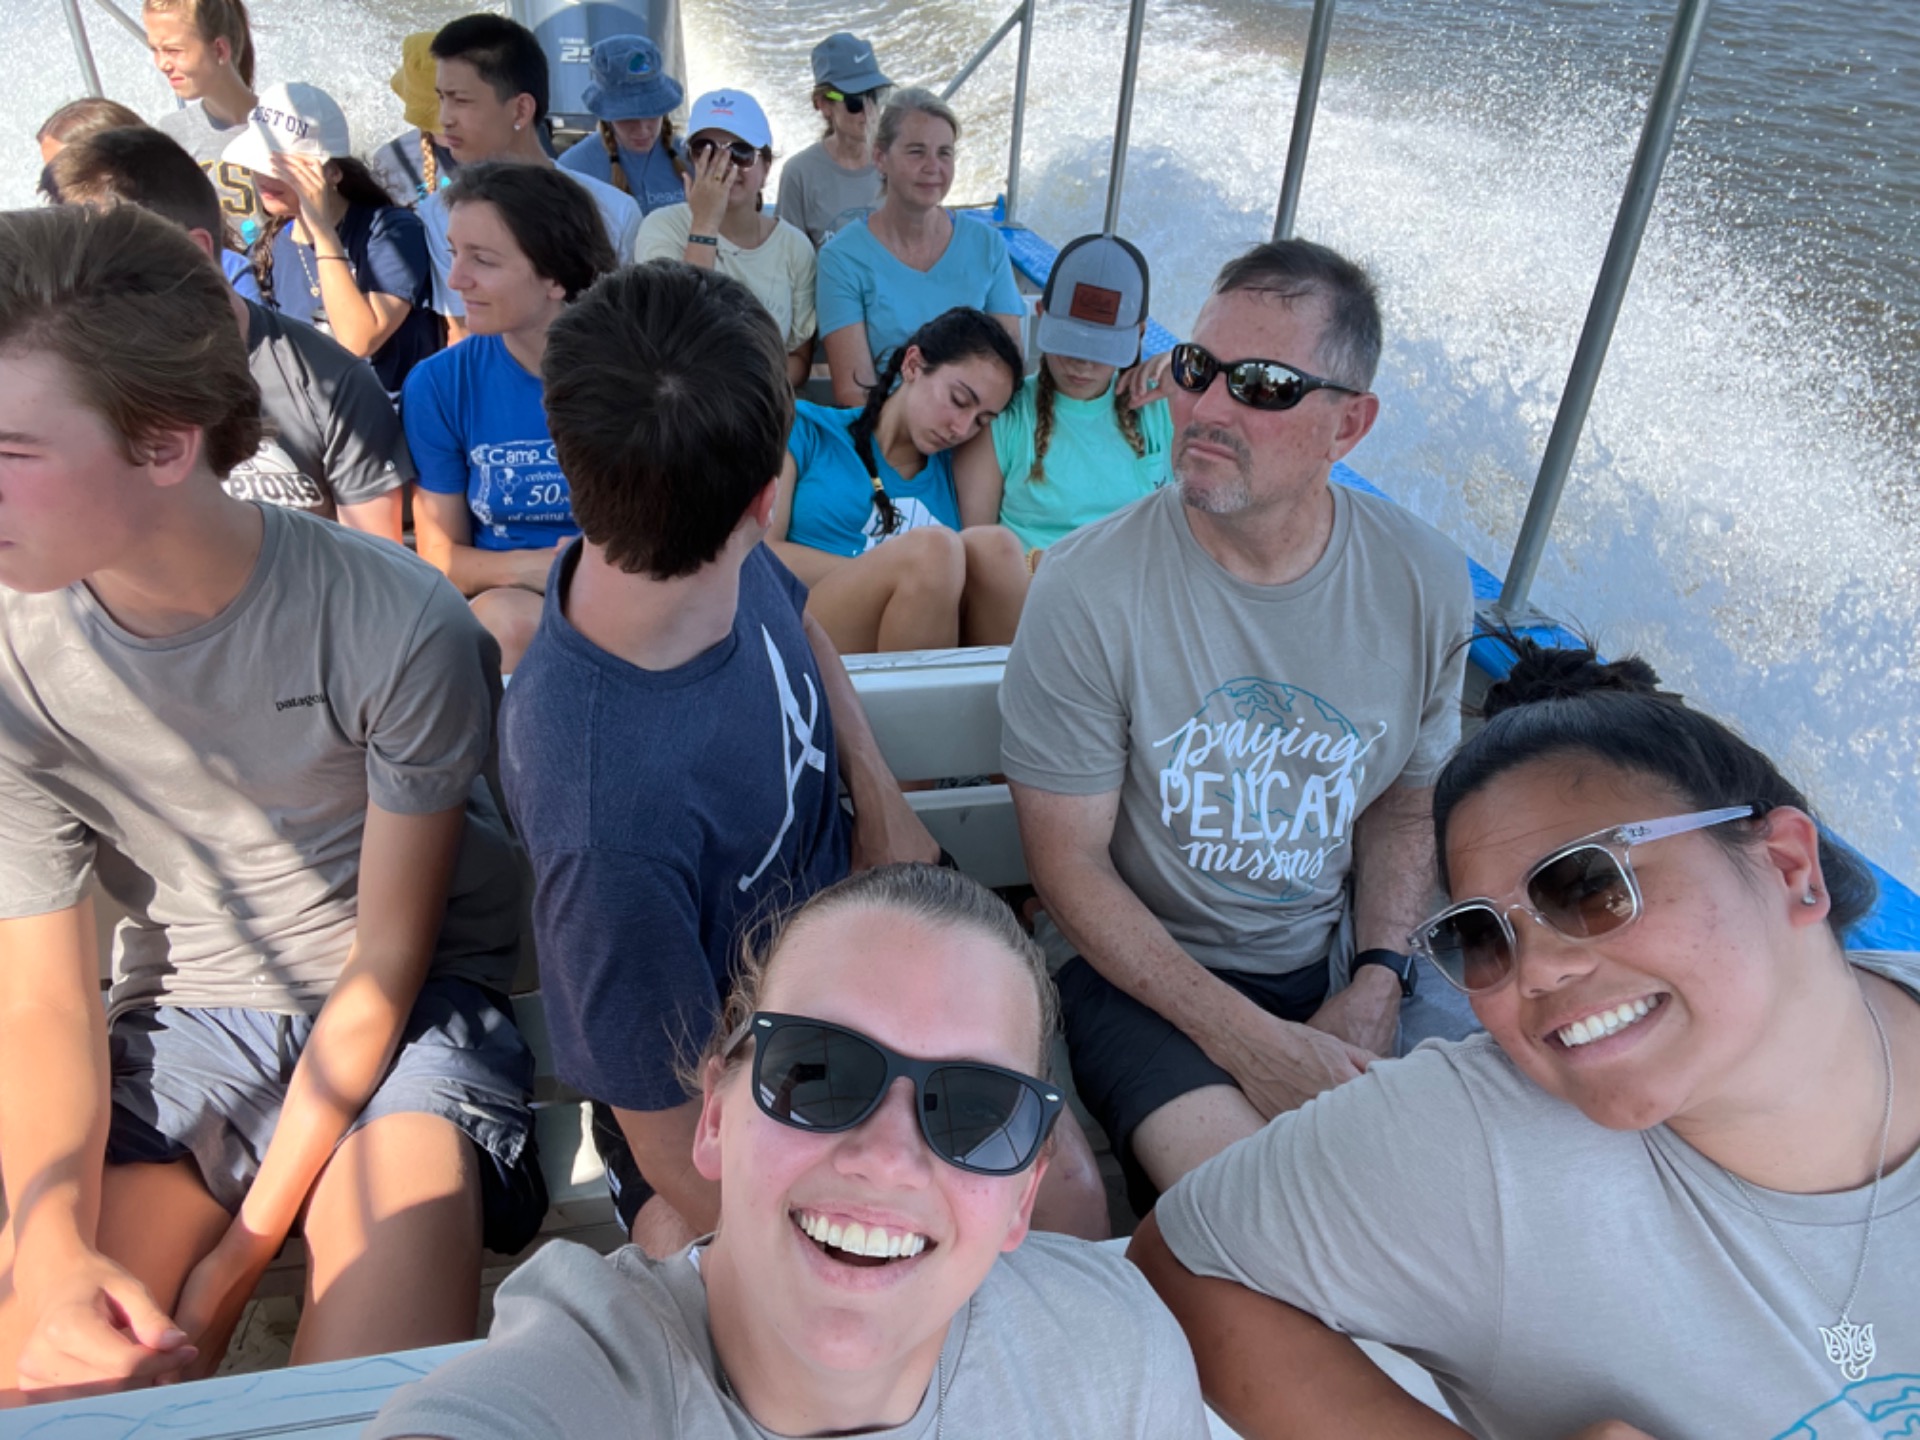 Swamp boat tour